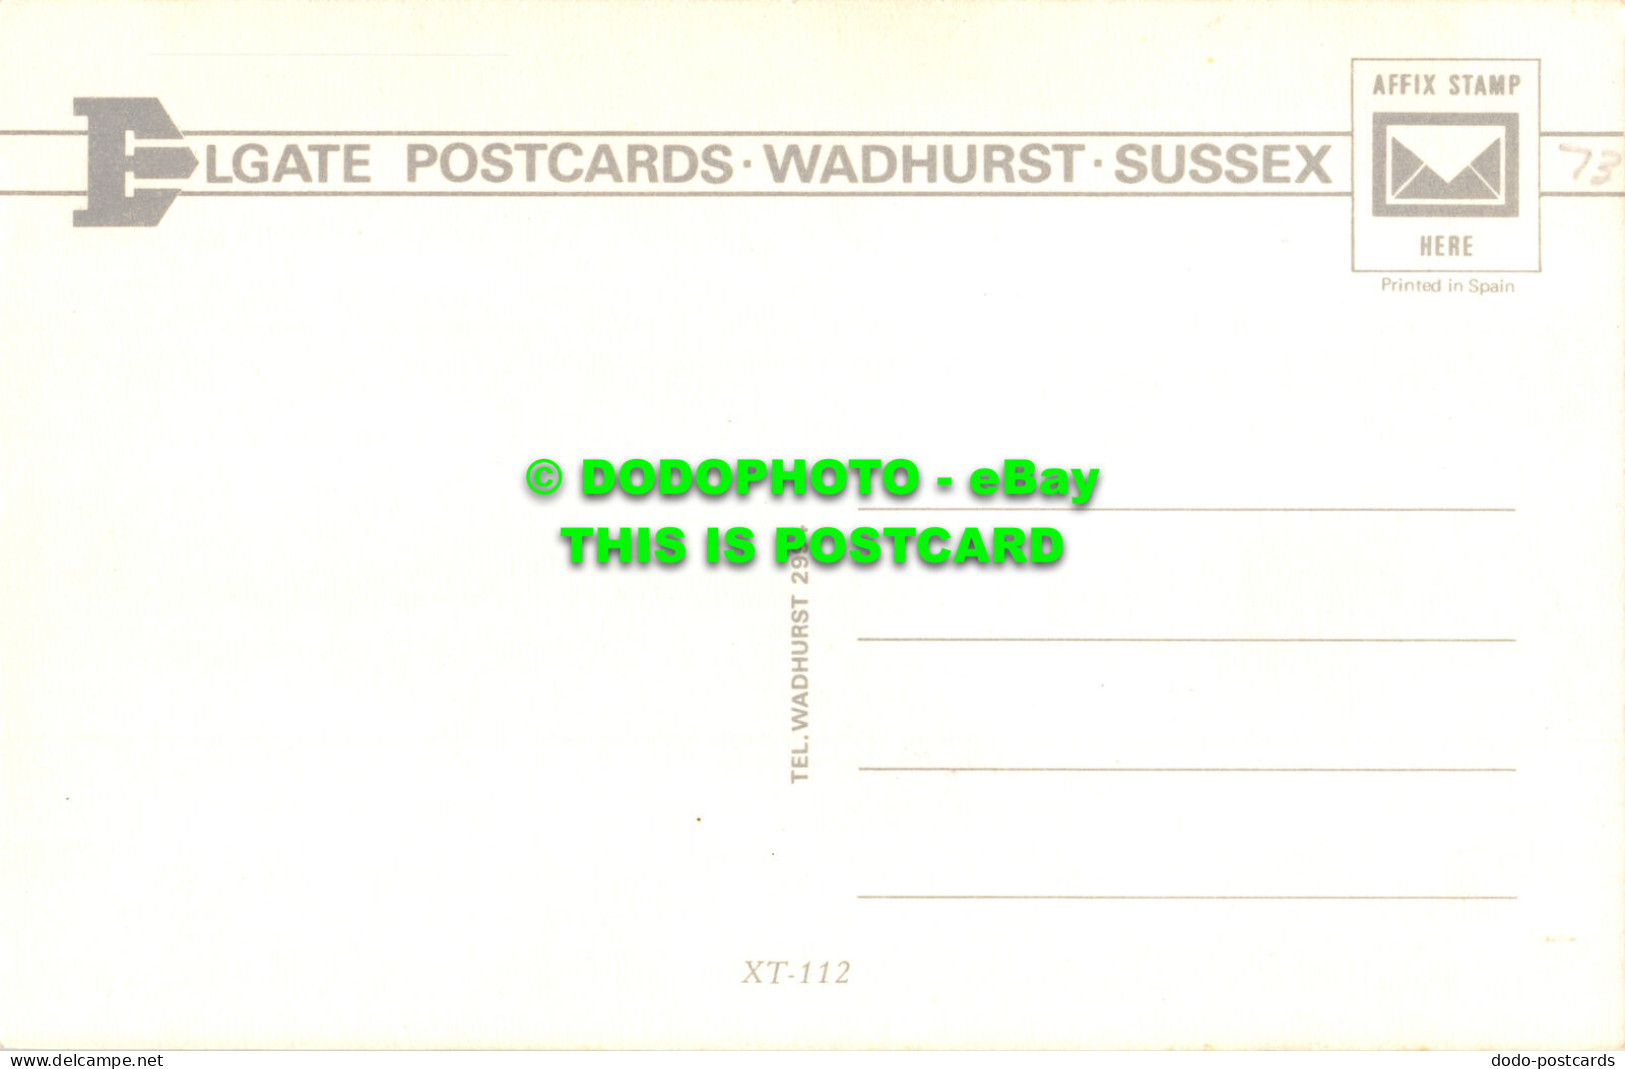 R528274 Black Horse. Elgate Postcards. Postcard - World